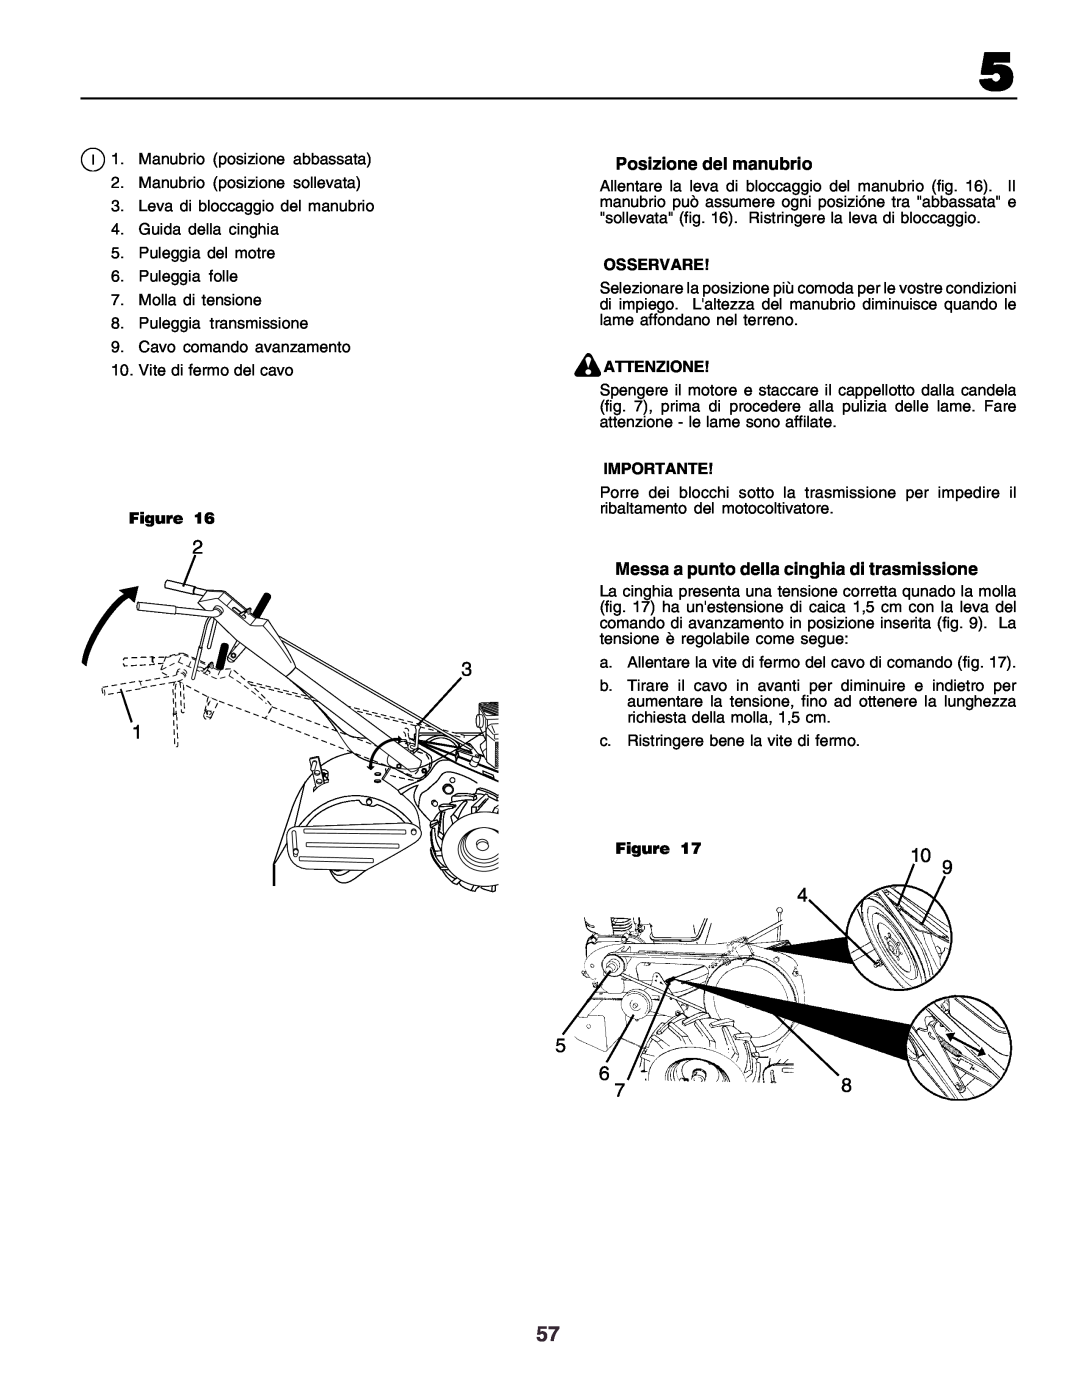 Husqvarna crt51 instruction manual Figure, Osservare, Attenzione, Importante 